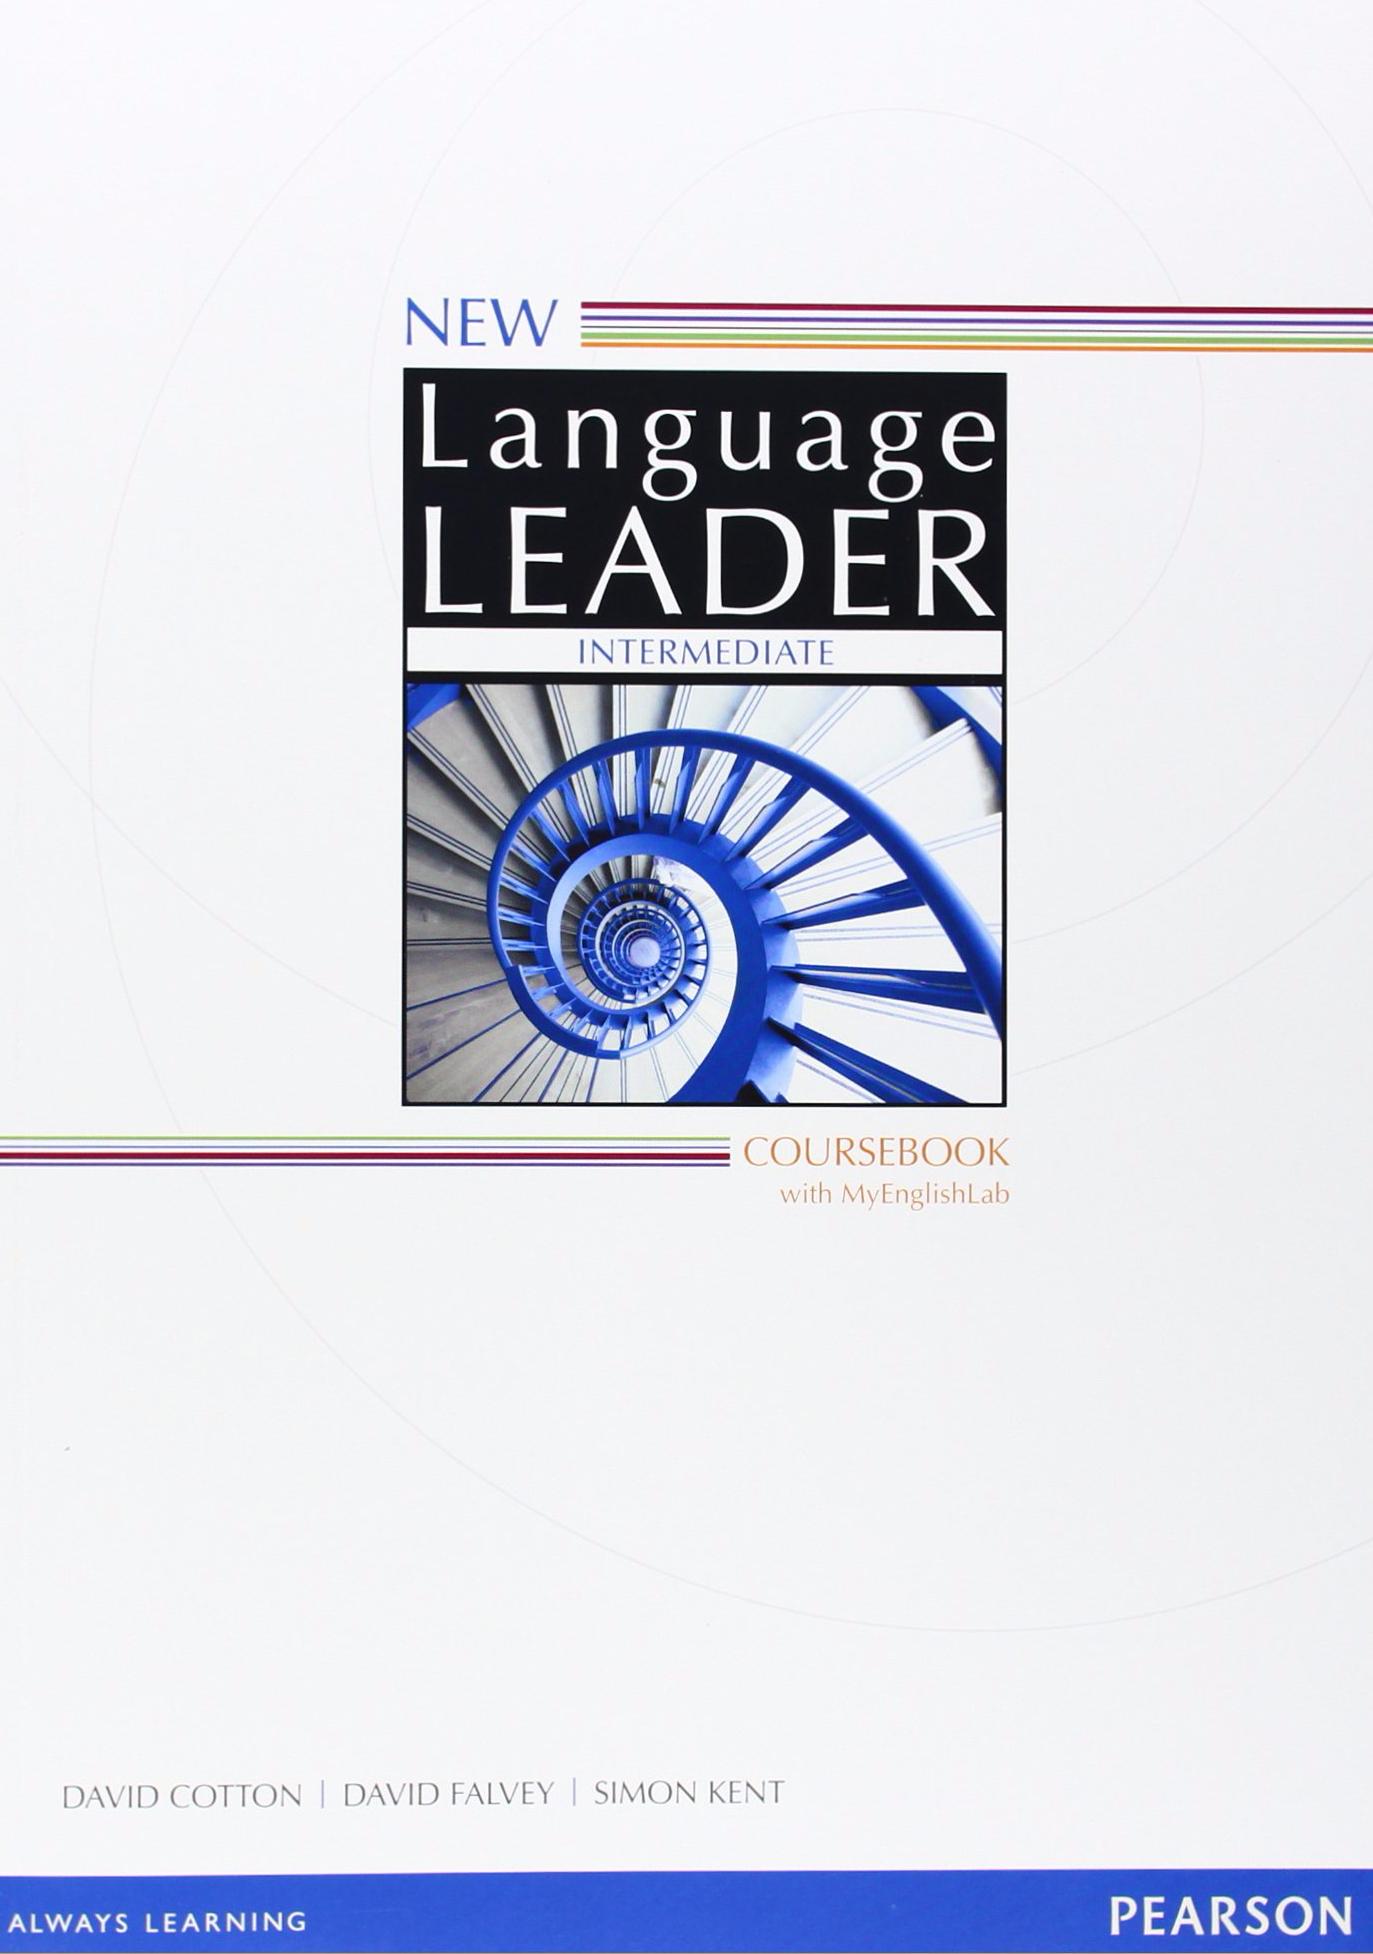 NEW LANGUAGE LEADER INTERMADIATE Student's  Book+My lab